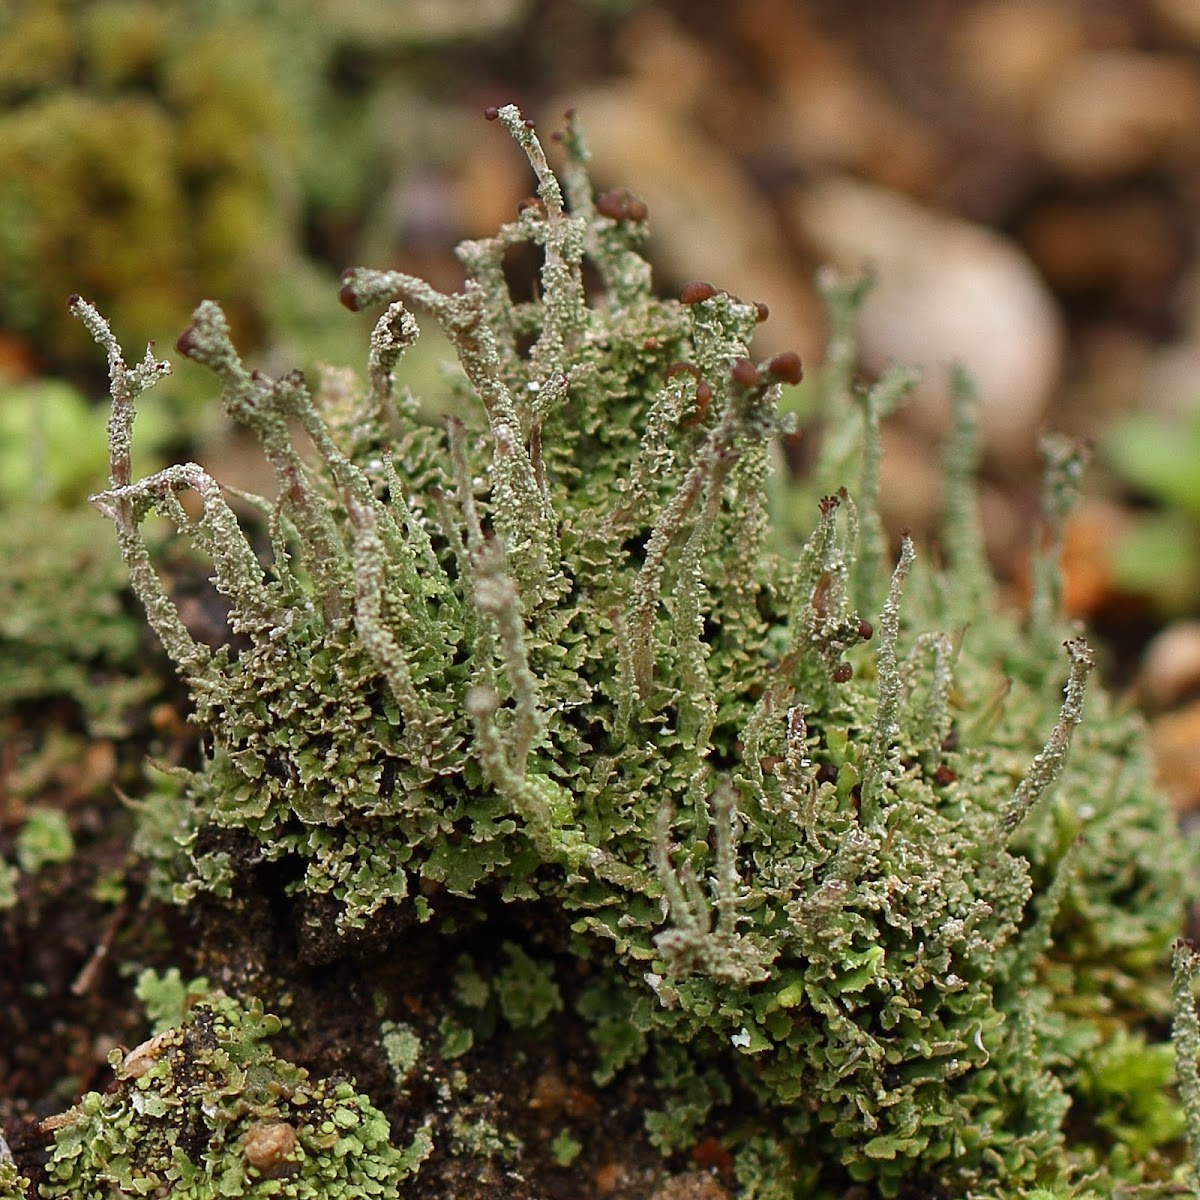 Cladonia lichens